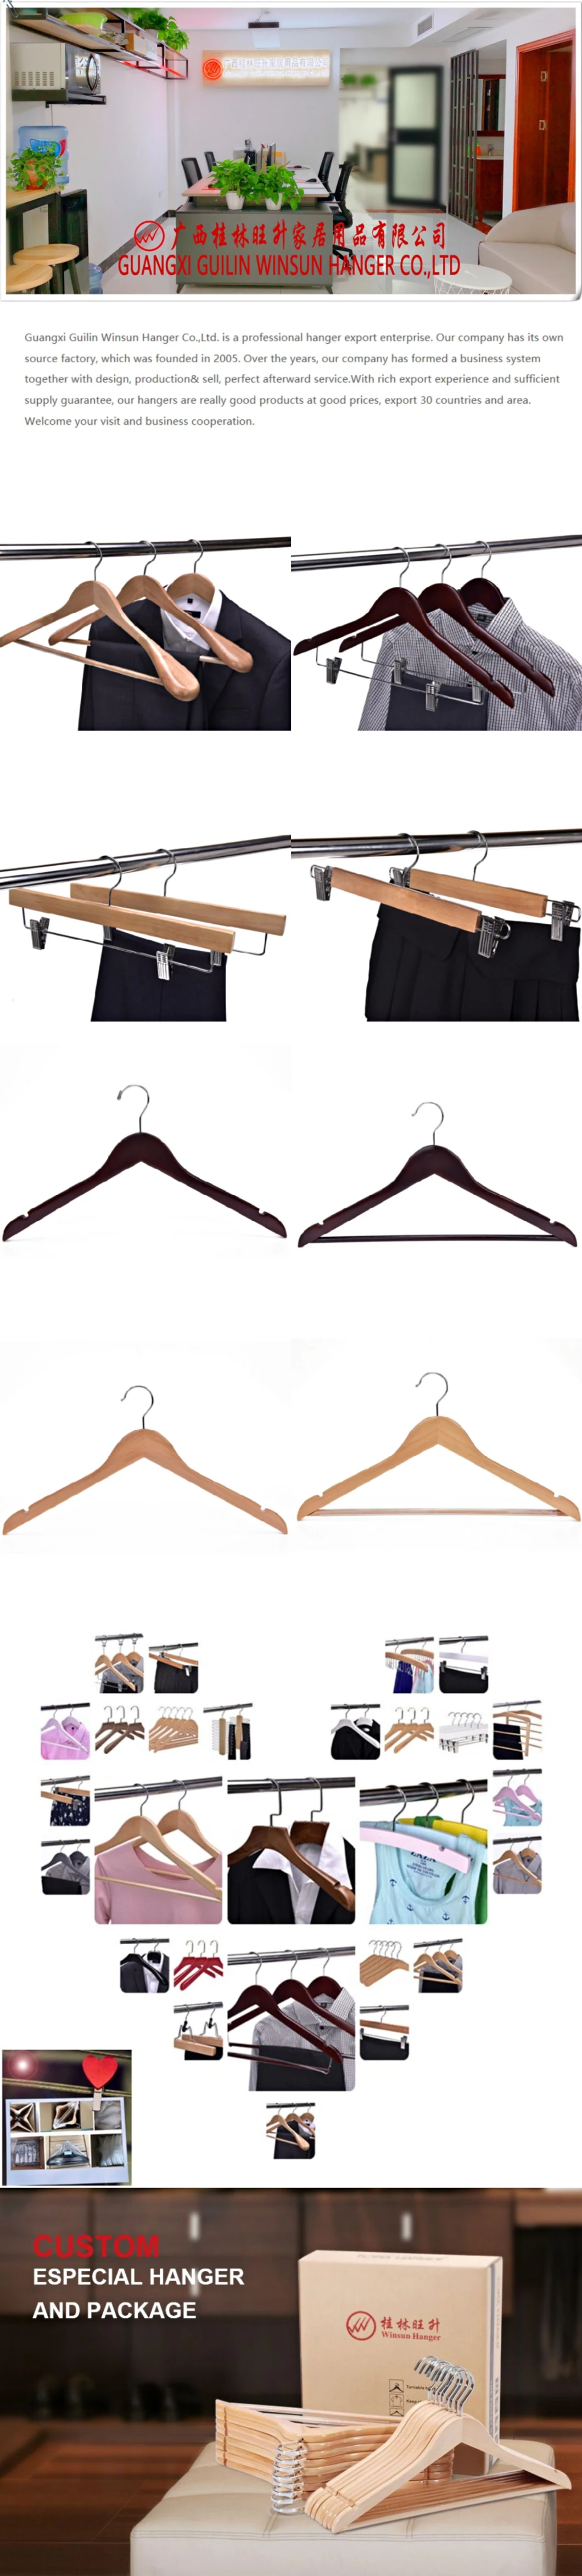 Winsun Hanger Home Rack Metal Clip Hanger Clothes Wooden Pants Hanger with Clips